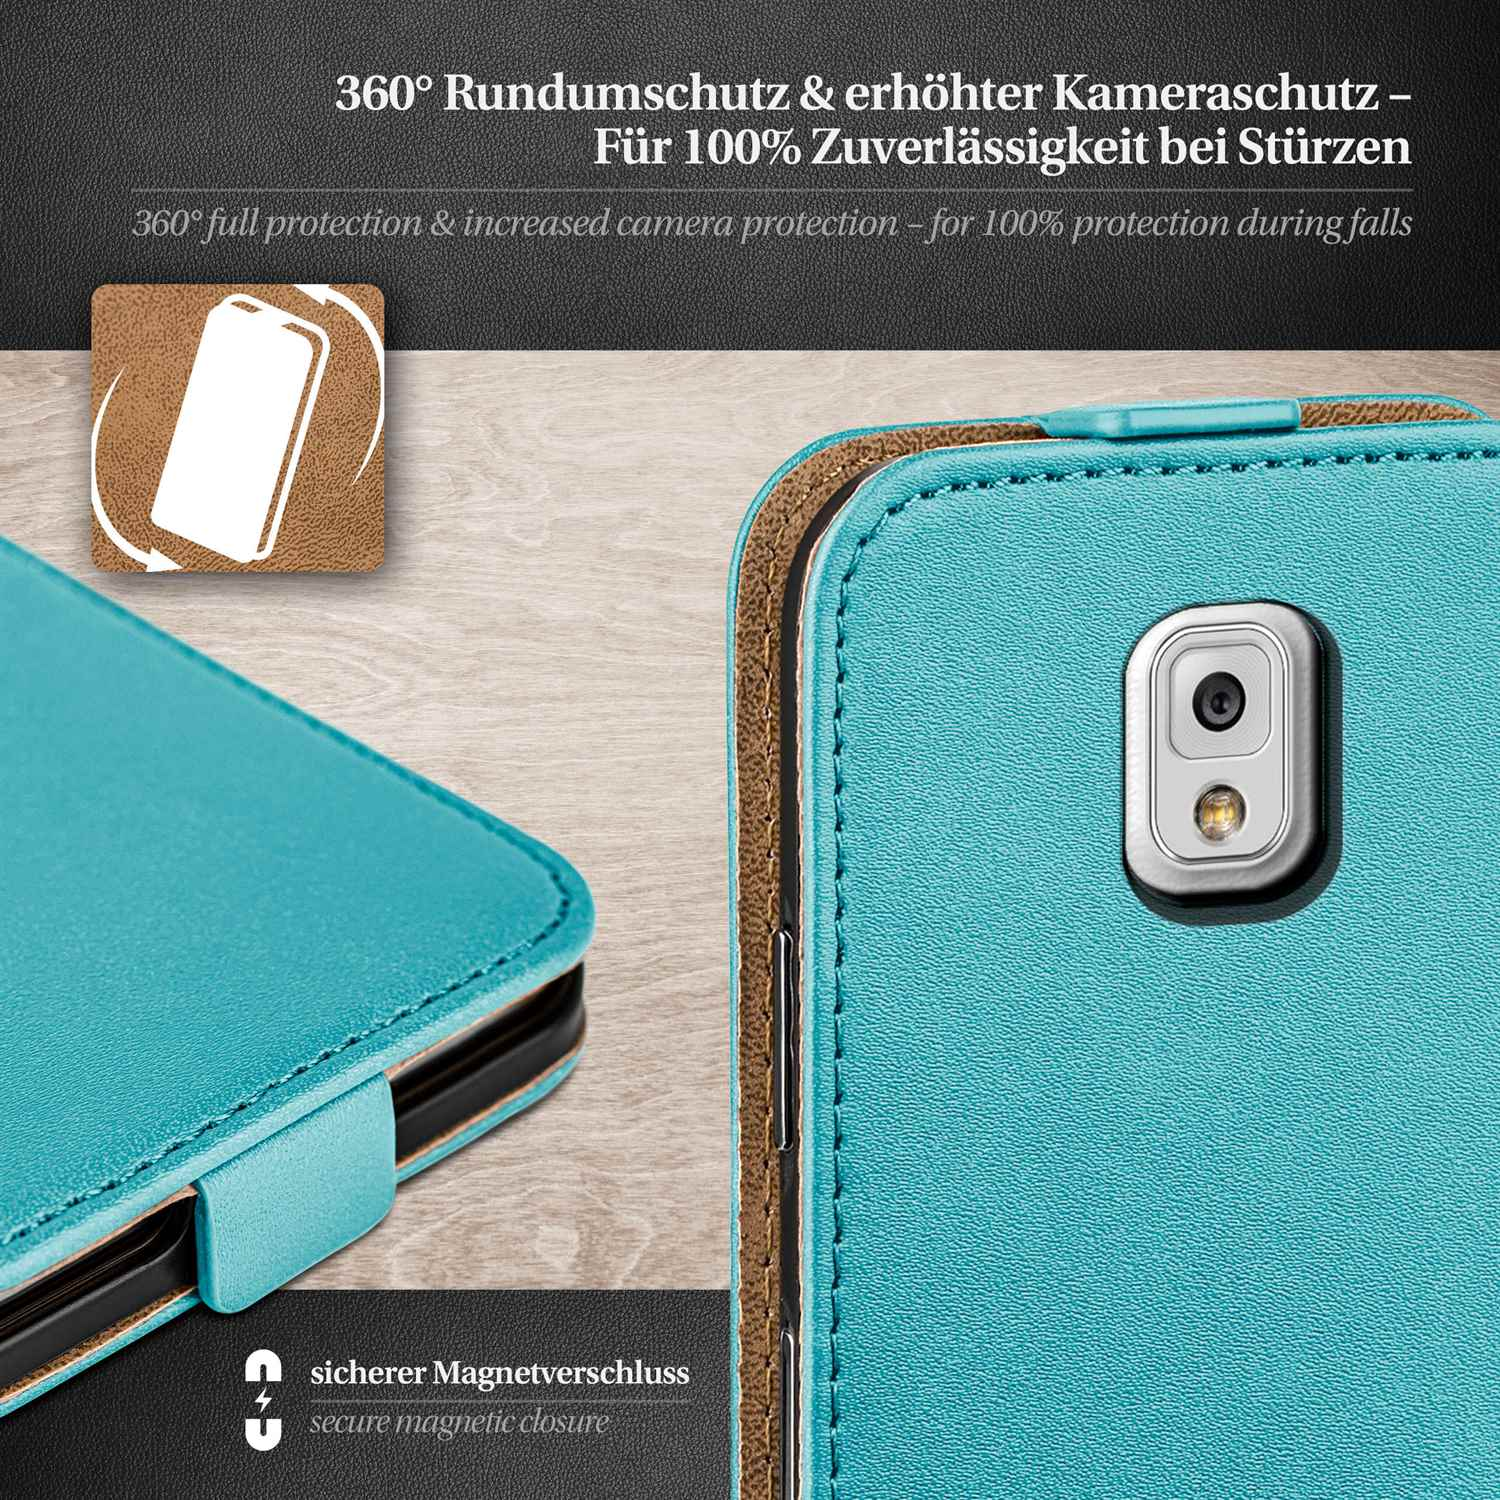 Case, Note 3, Aqua-Cyan Flip Cover, Galaxy MOEX Samsung, Flip